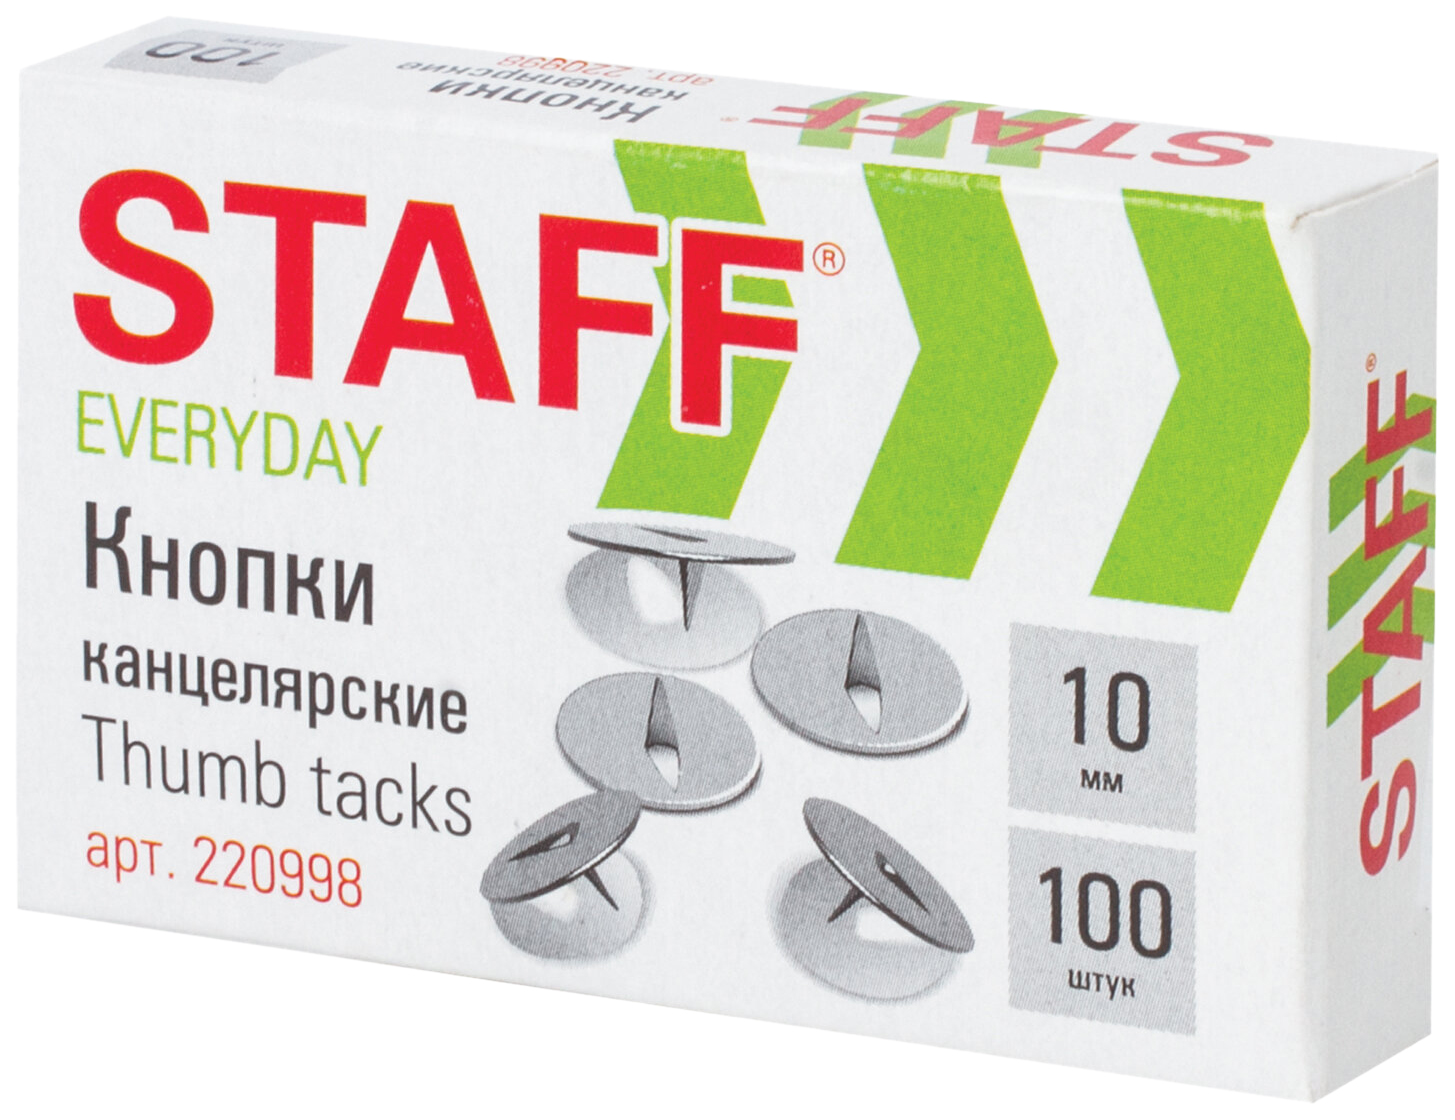 Кнопки канцелярские STAFF EVERYDAY, 10 мм х 100 шт РОССИЯ, в картонной коробке, 220998